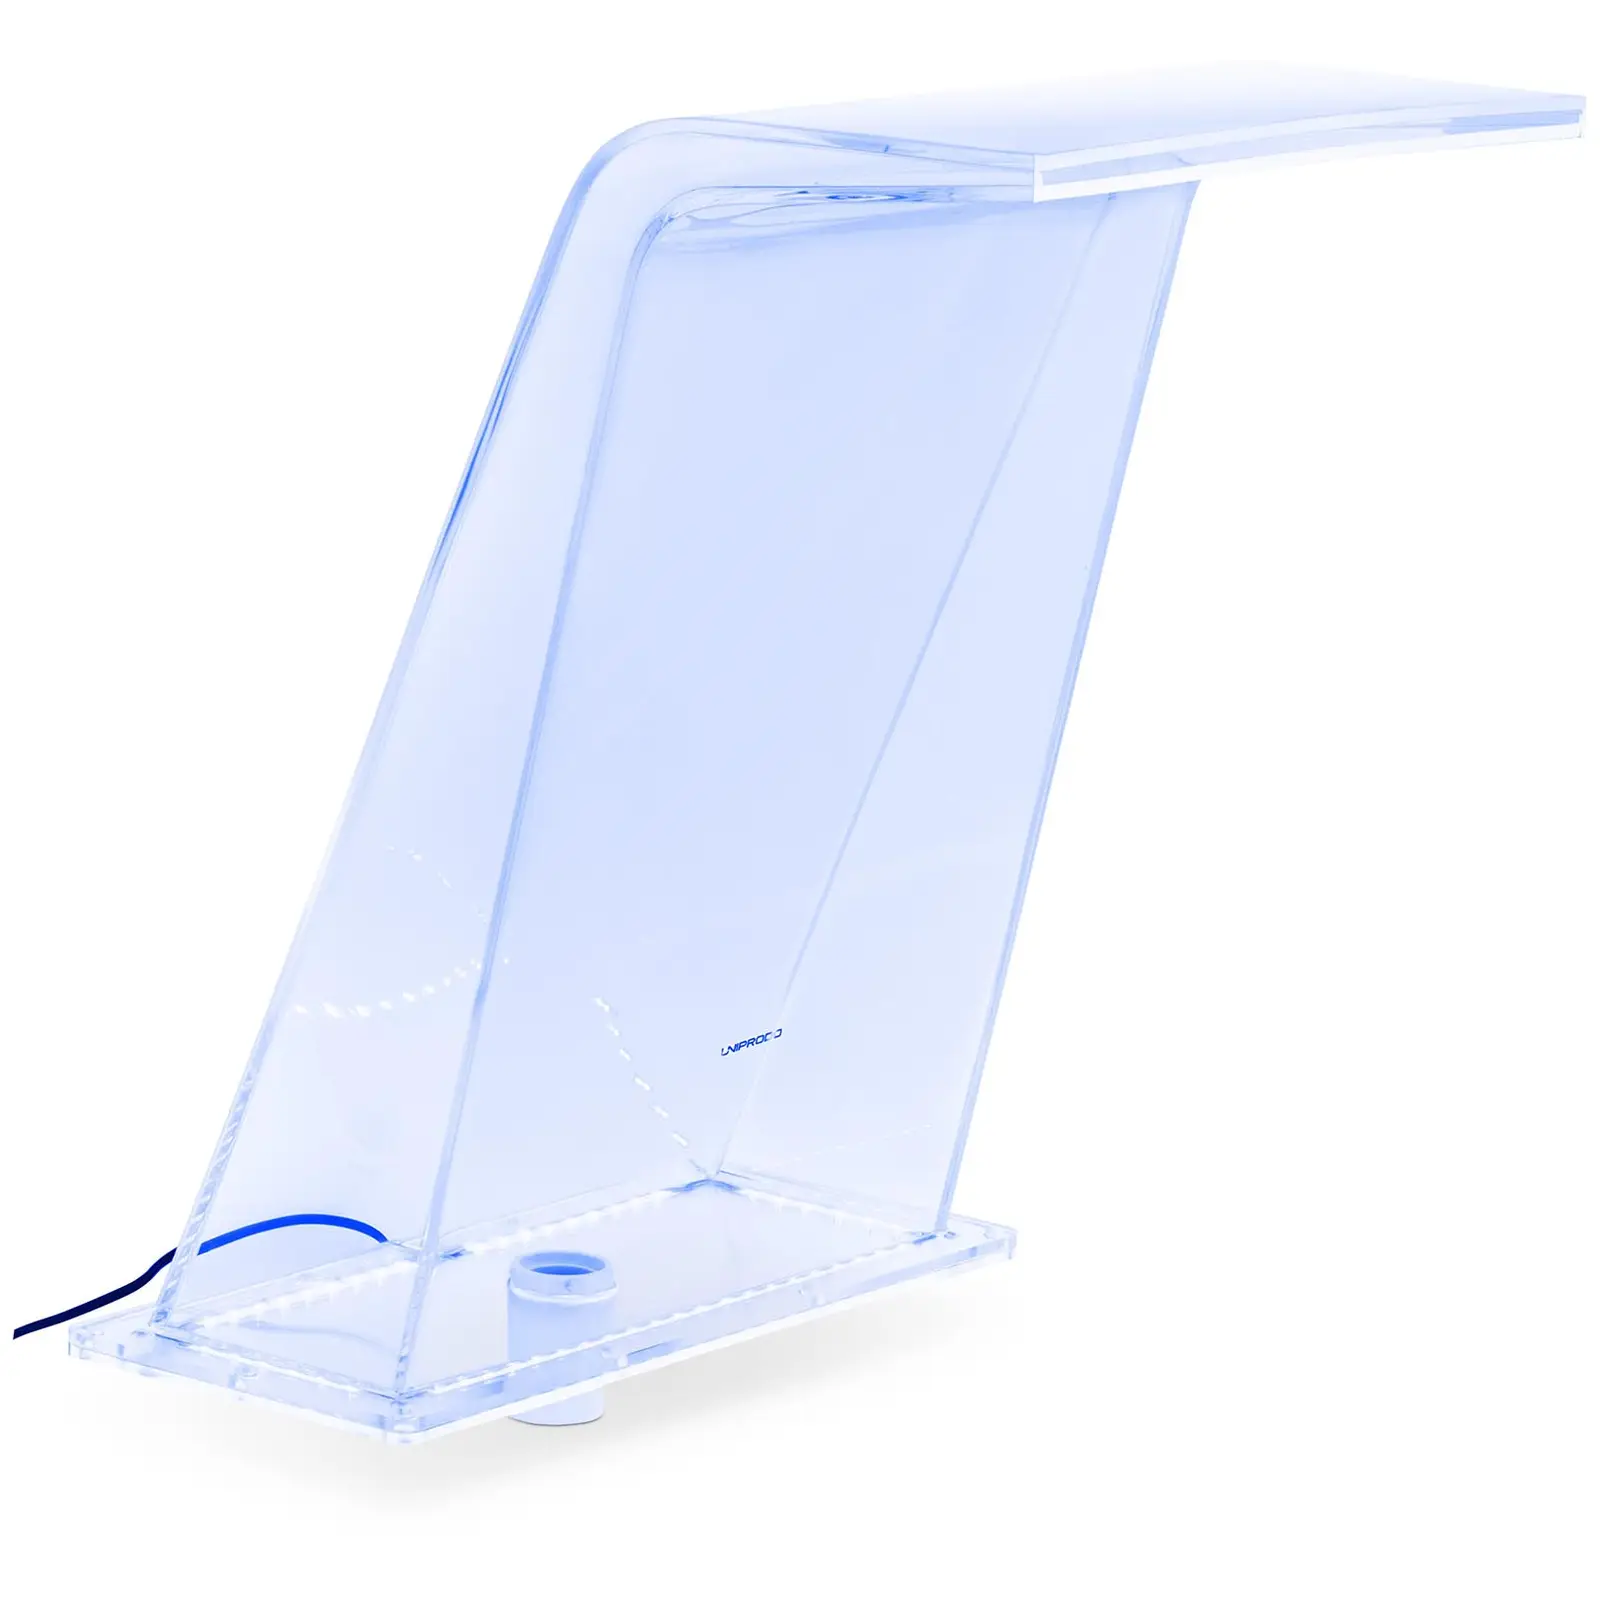 Chrlič vody - 45 cm - LED osvětlení - modrá/bílá barva